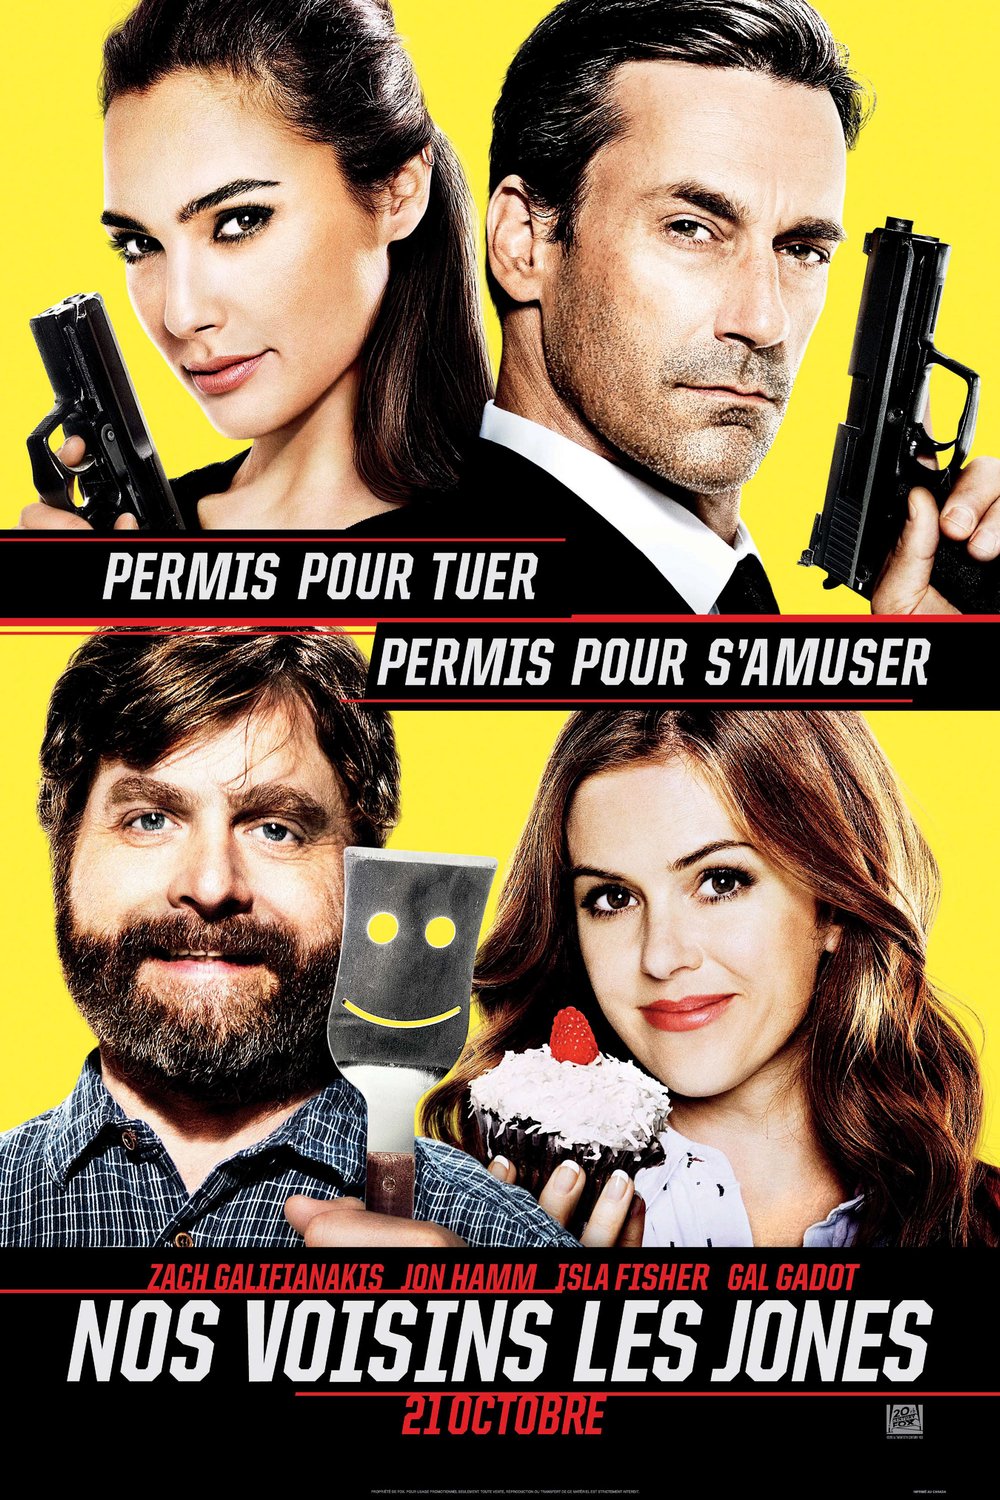 Poster of the movie Nos voisins les Jones